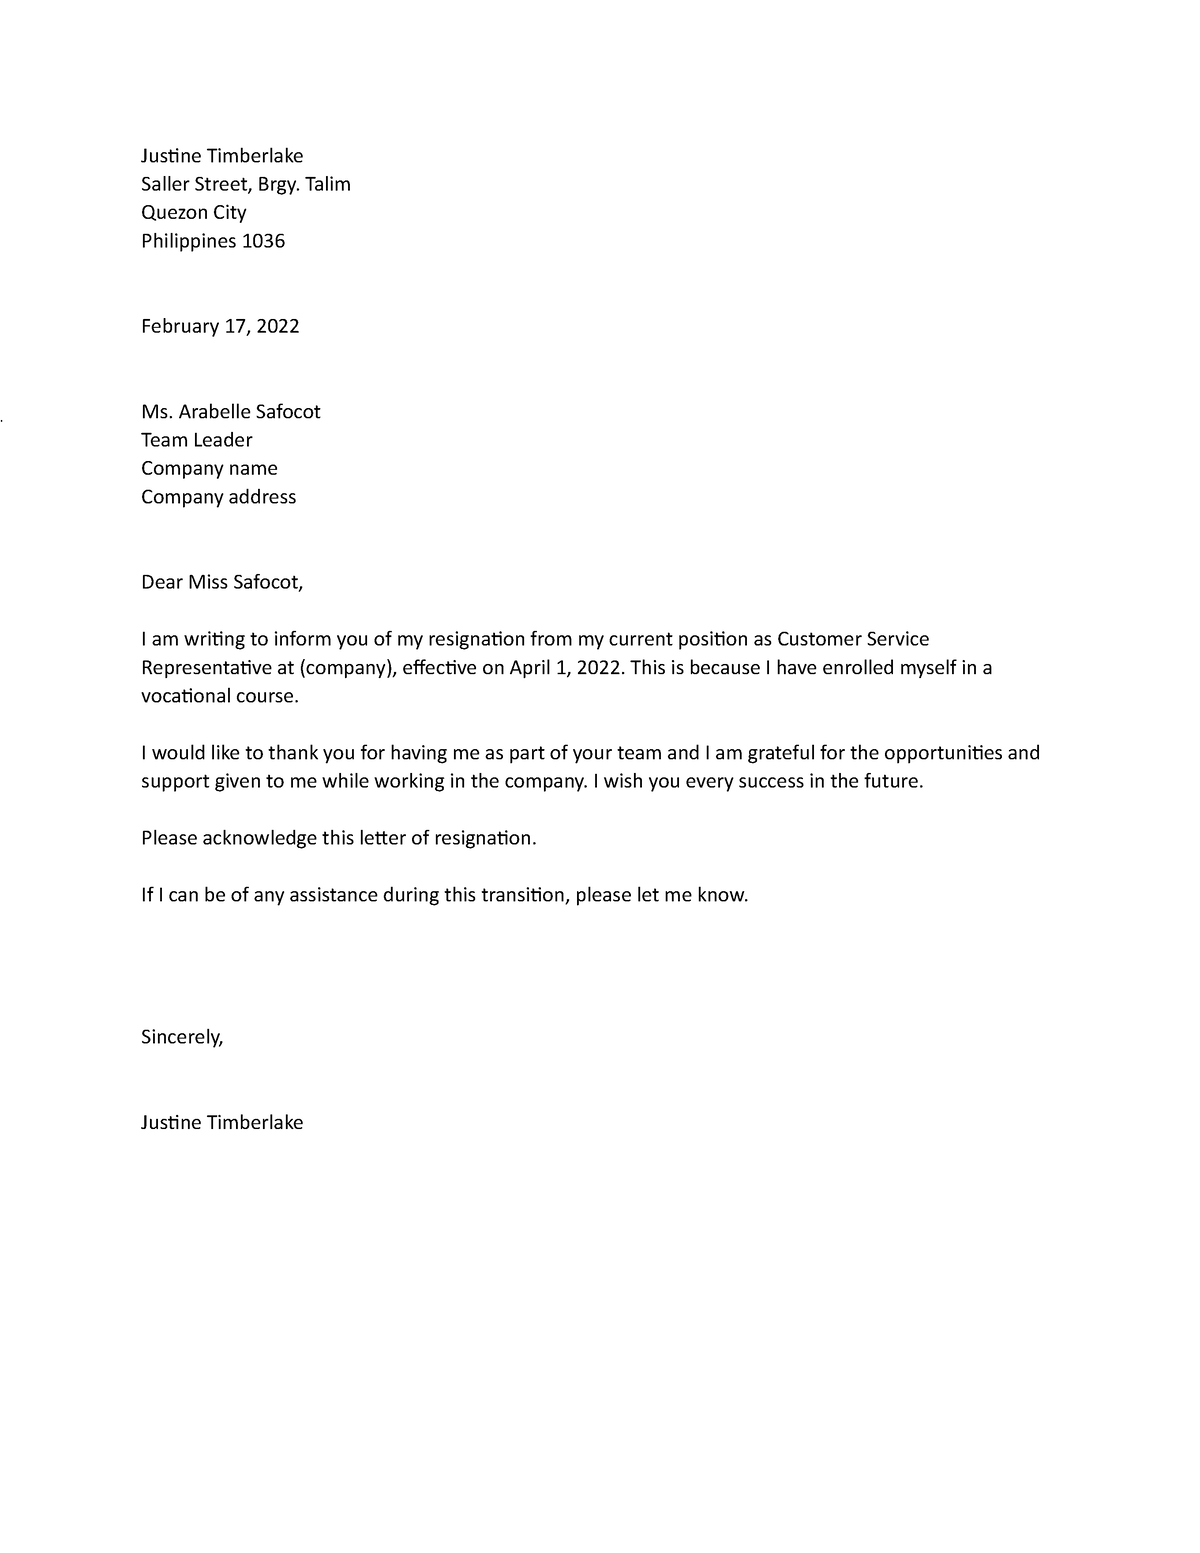 Example of Resignation Letter - Justine Timberlake Saller Street, Brgy ...